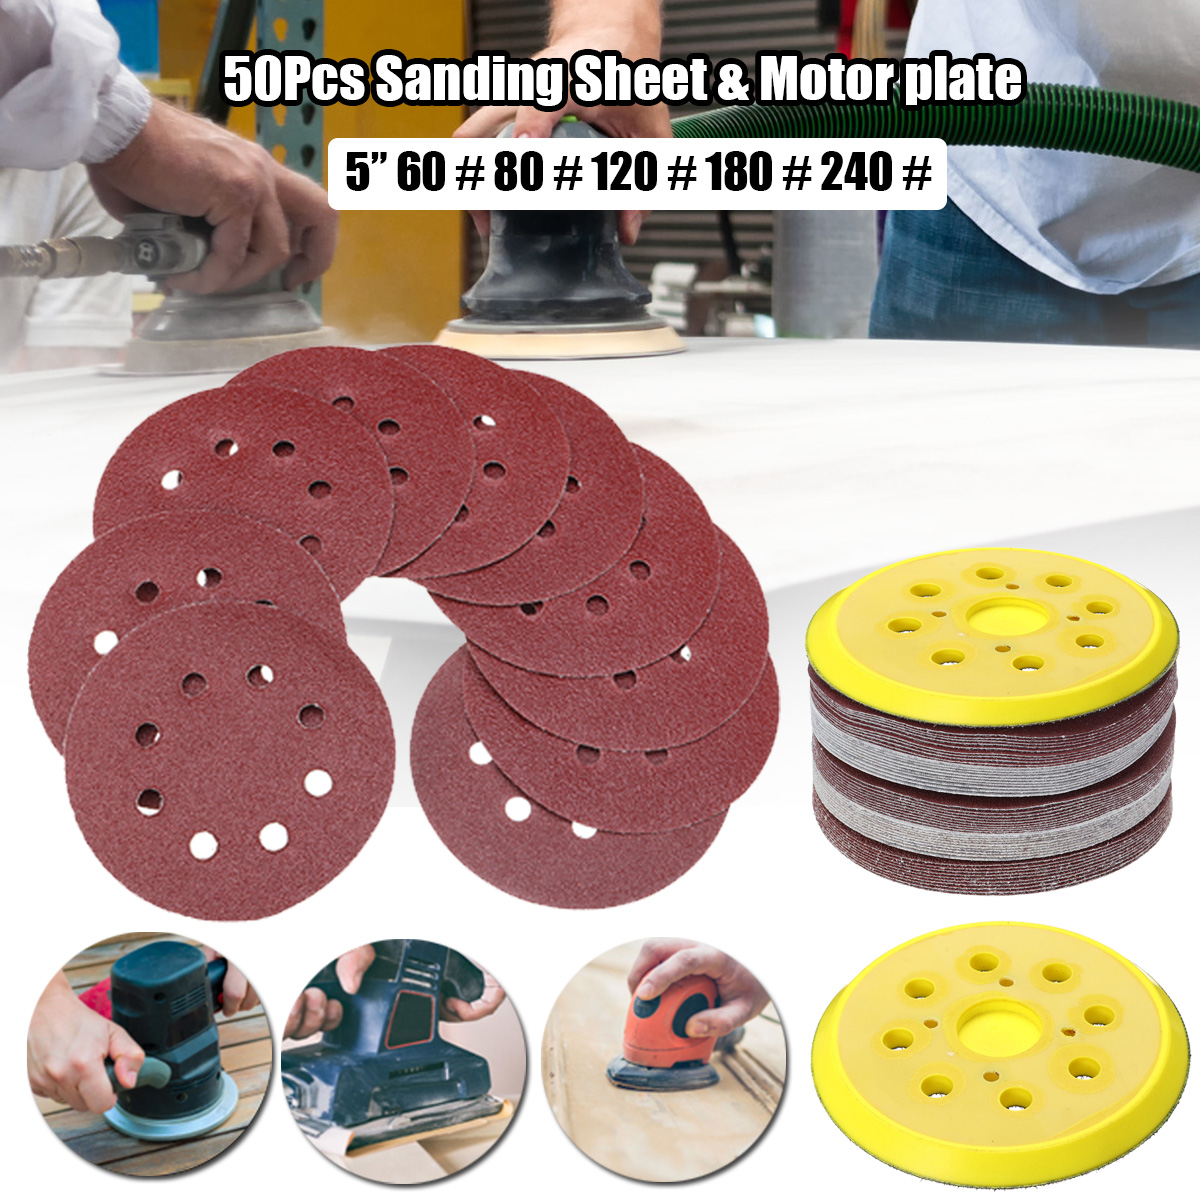 50pcs-125mm-60-240-Grit-Sanding-Sheet-8-Hole-Pads-Sandpaper-with-Polishing-Pad-1628739-1